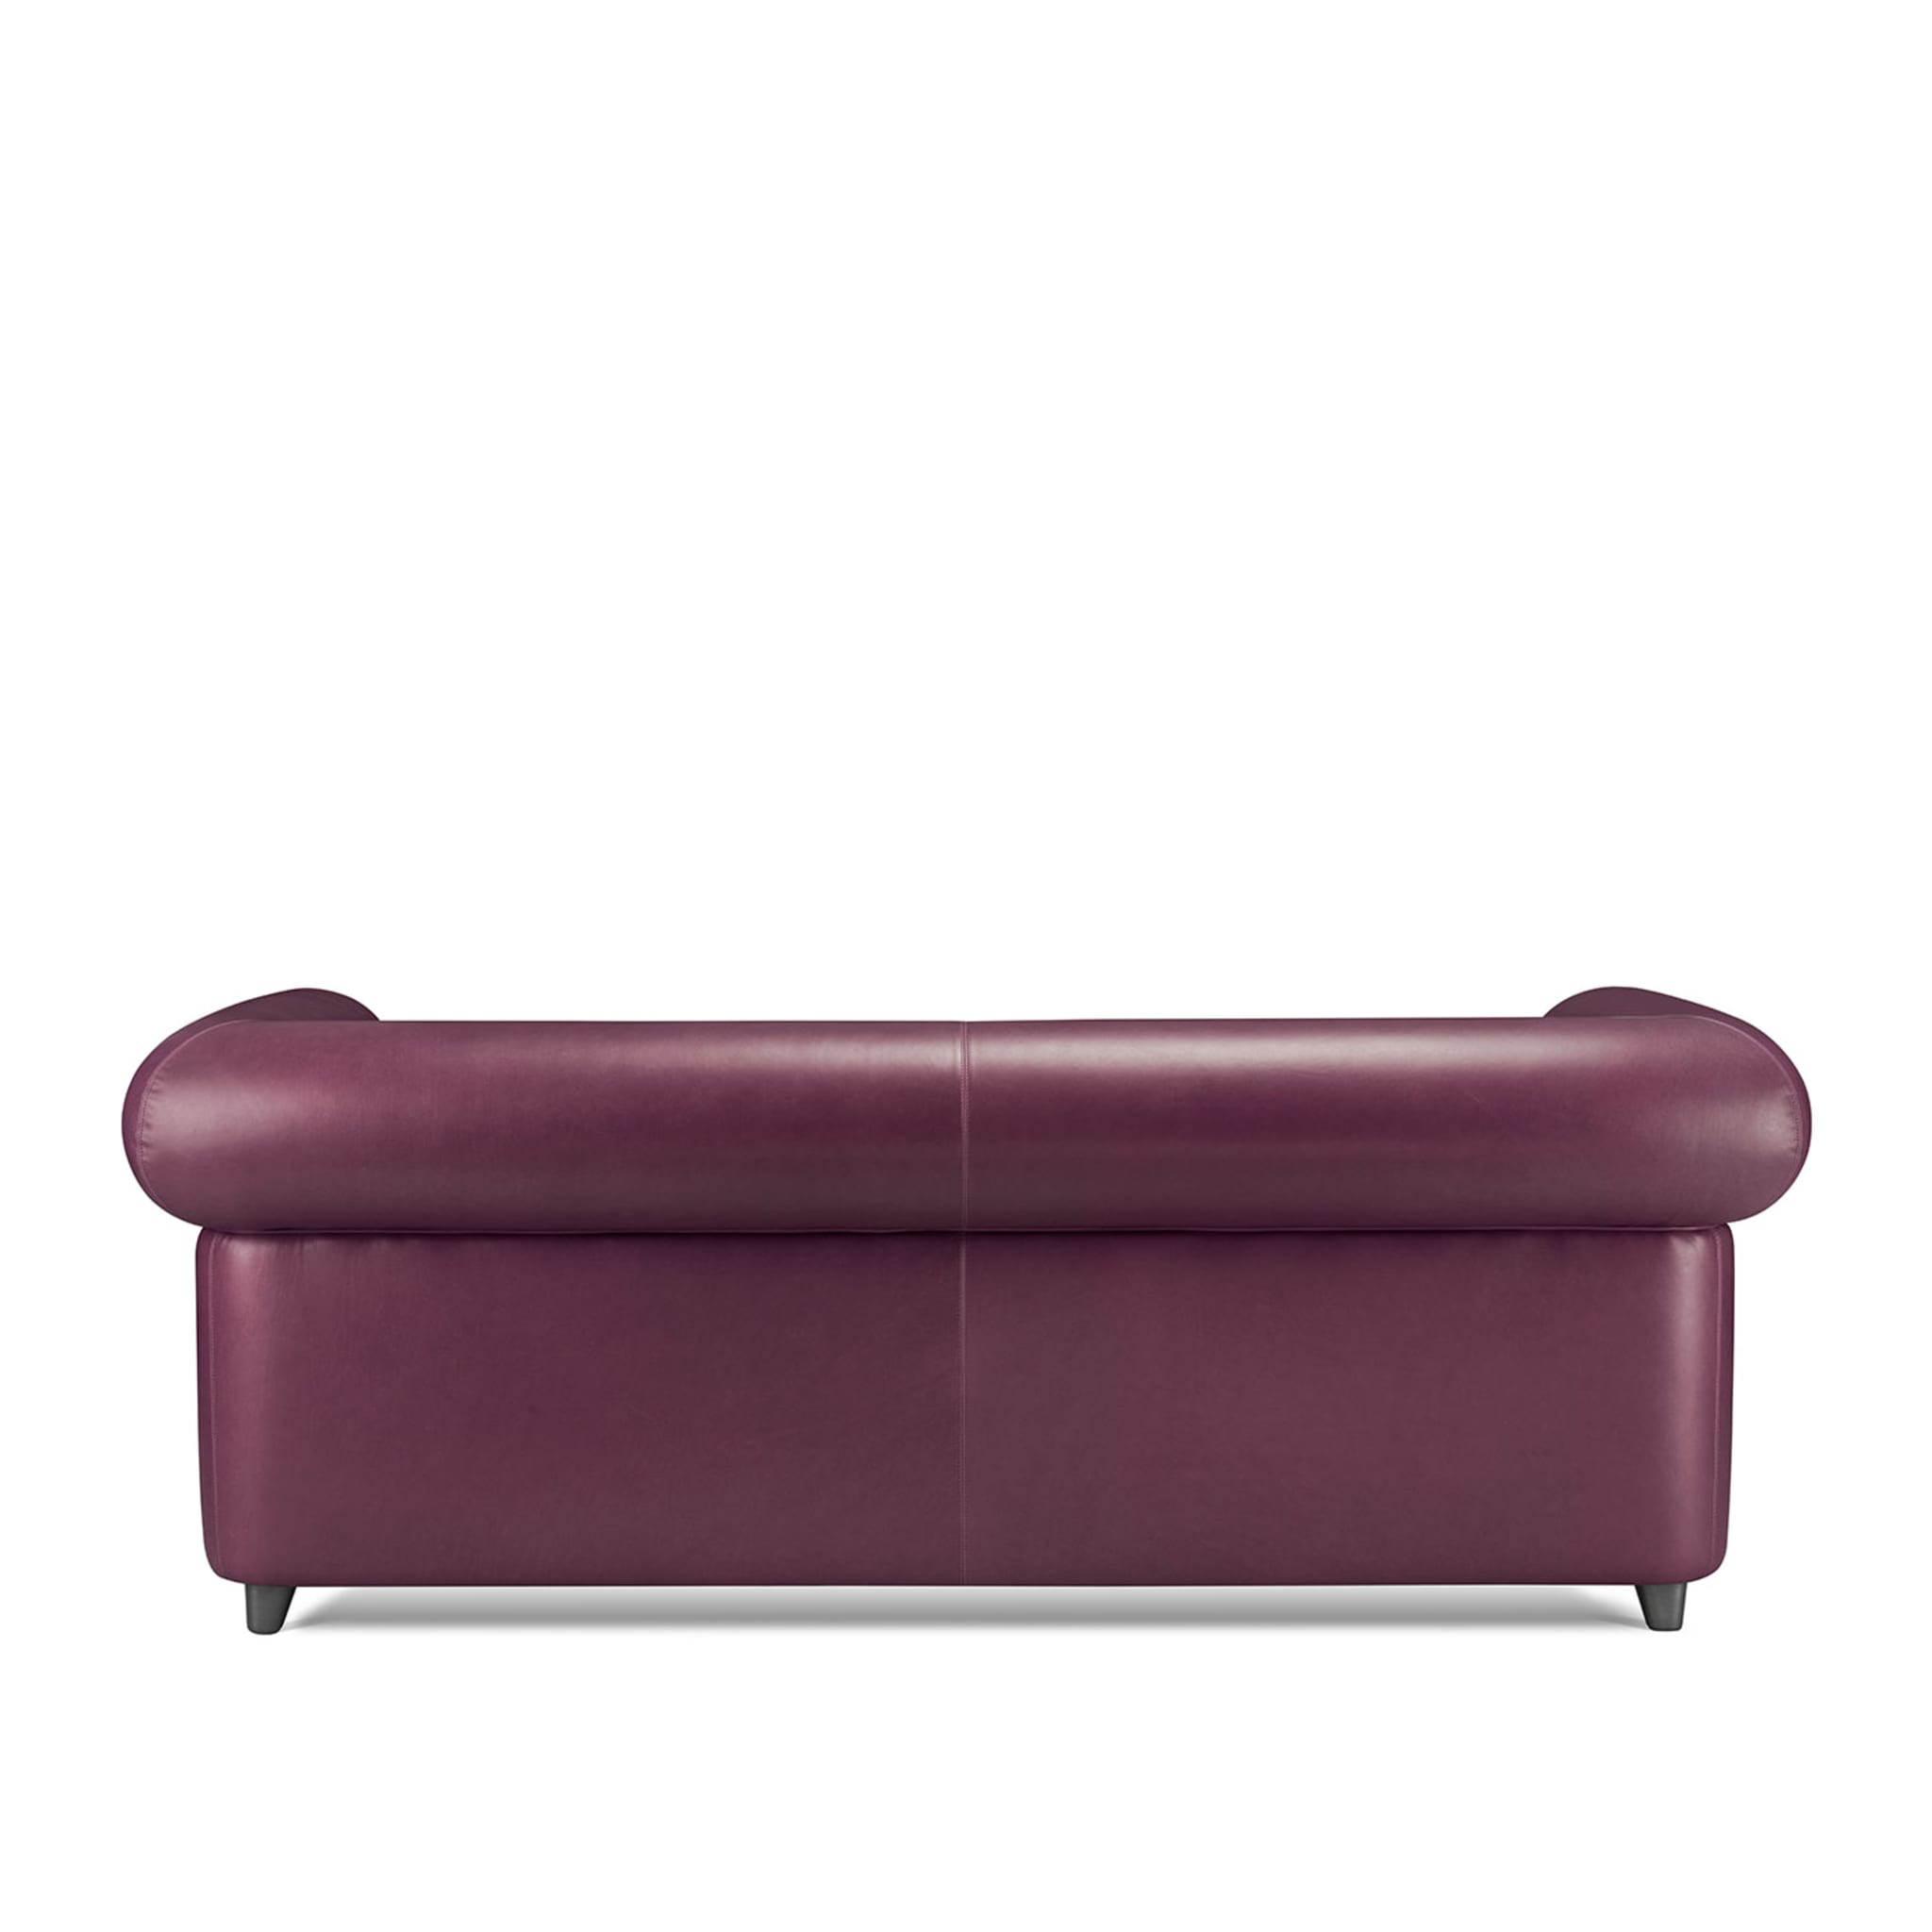 Portofino 2-sitzer lila sofa by Stefano Giovannoni - Alternative Ansicht 3